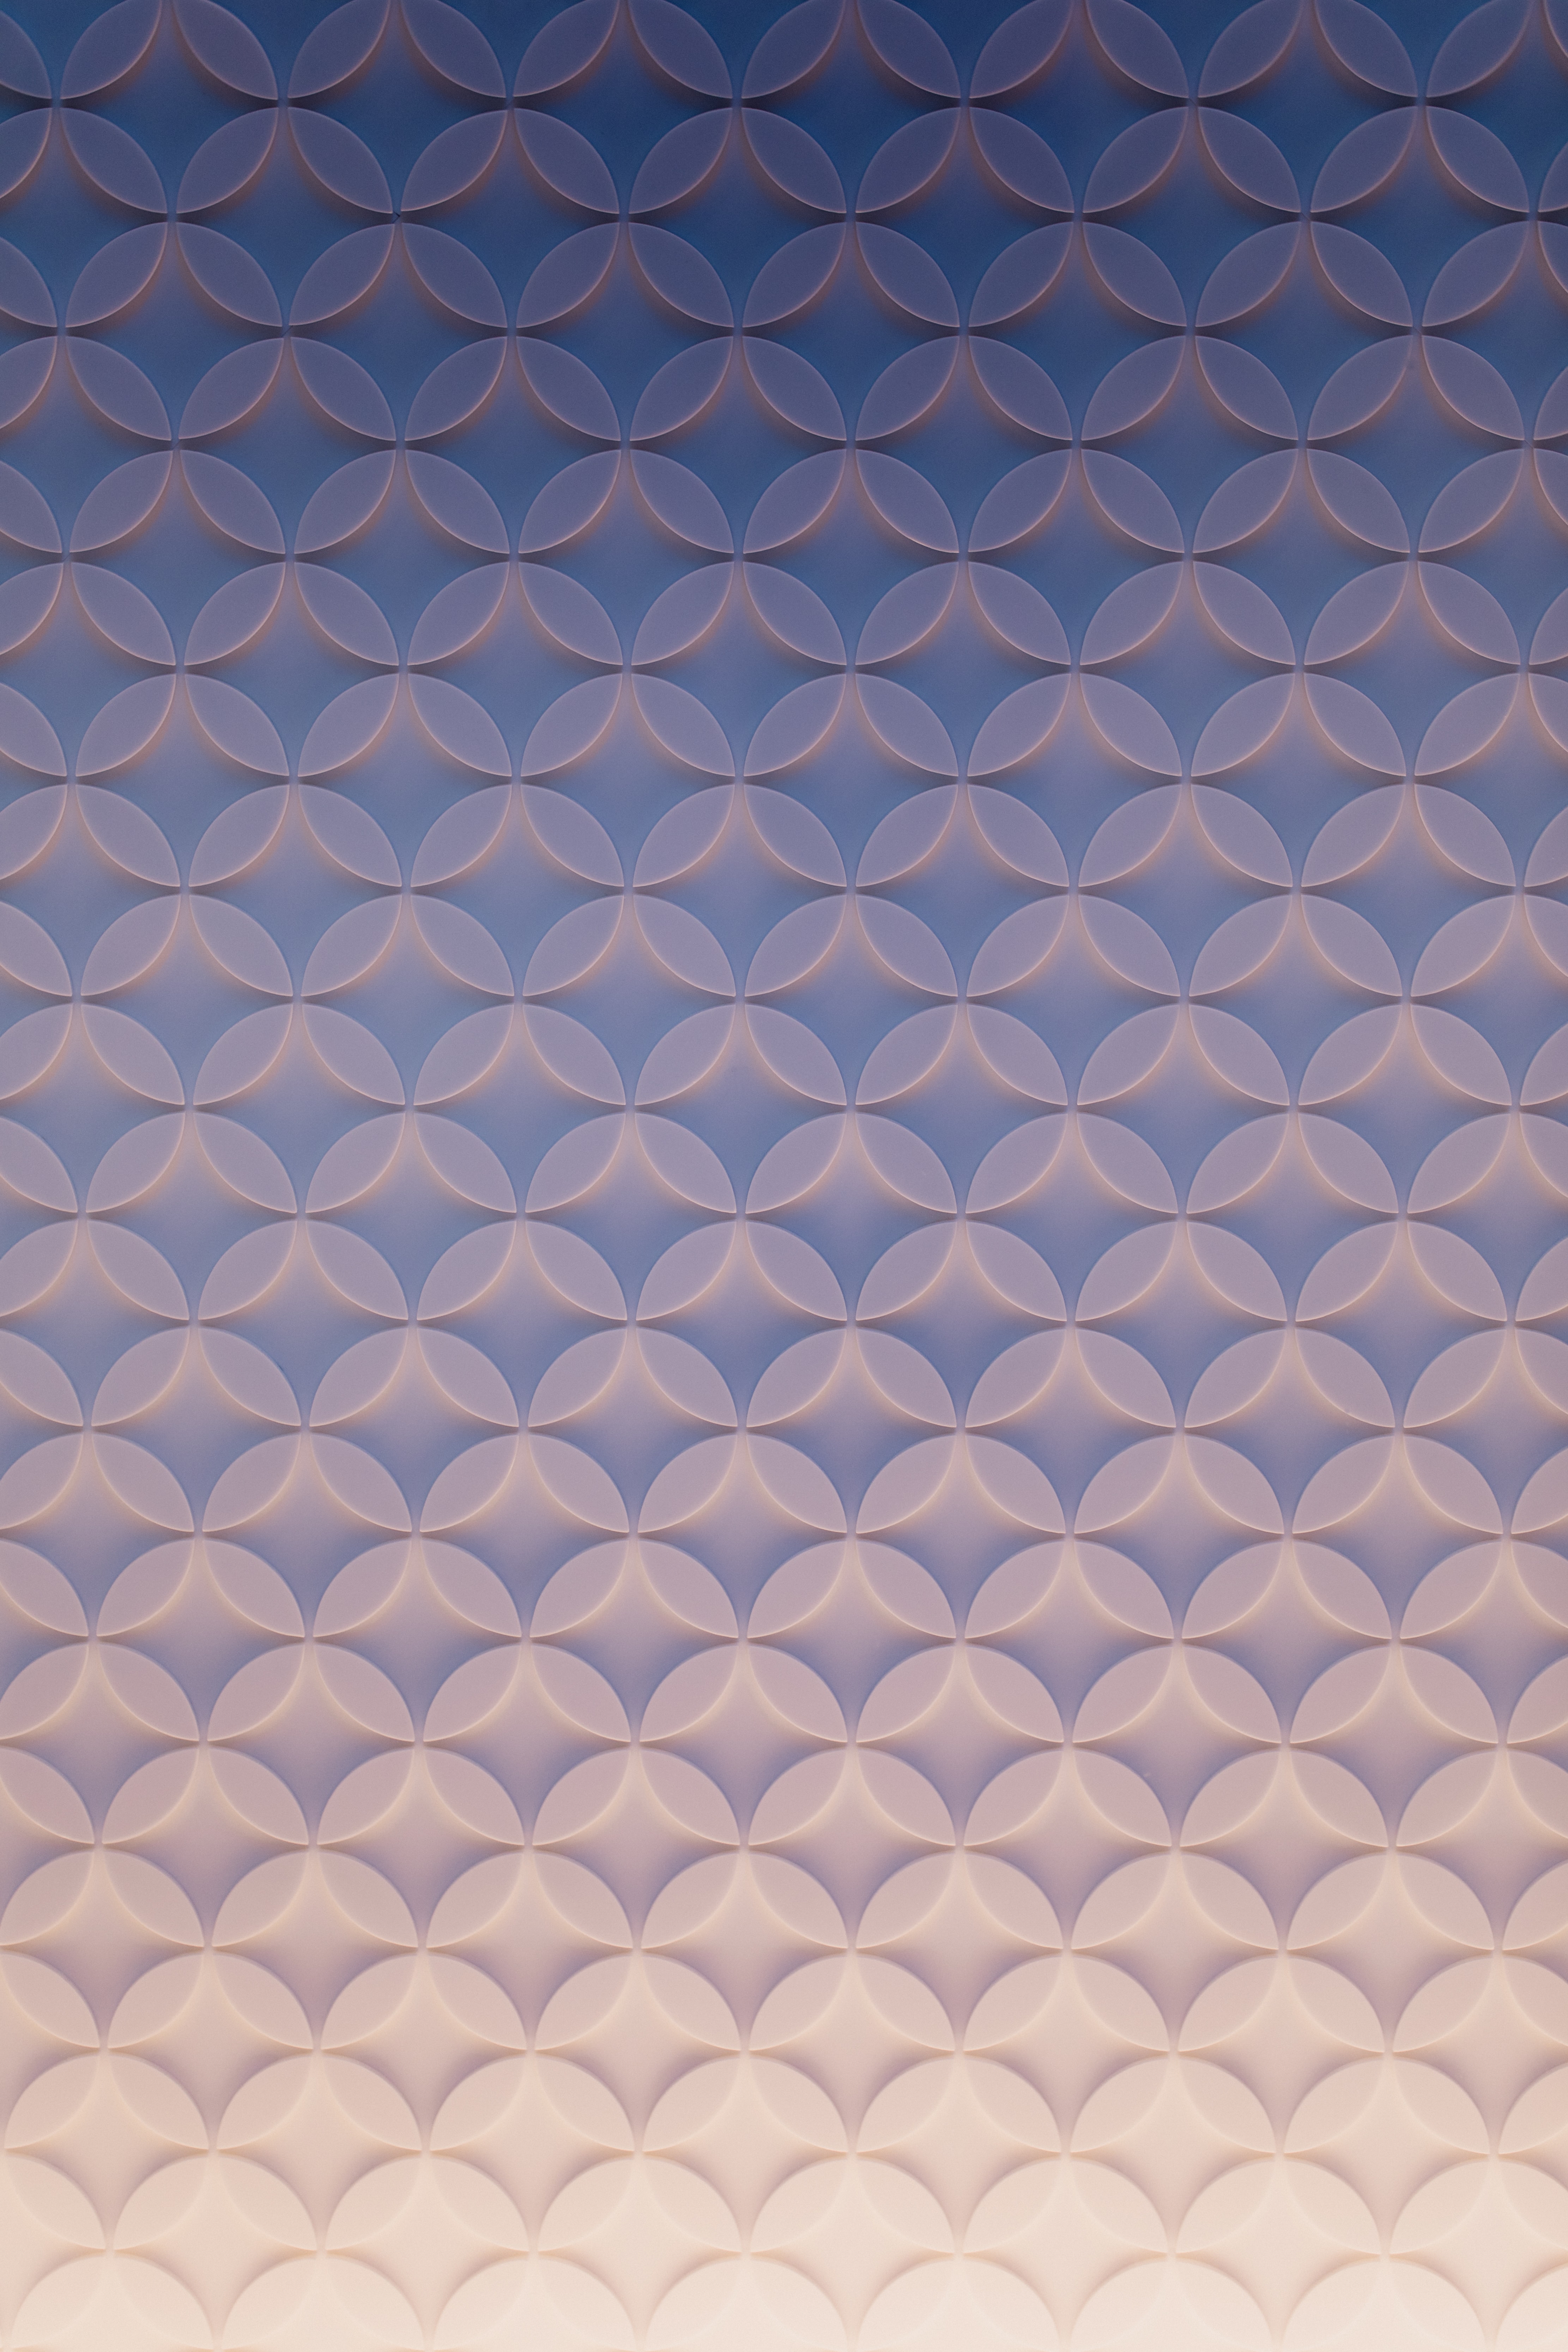 free pattern wallpapers,pattern,blue,line,design,peach